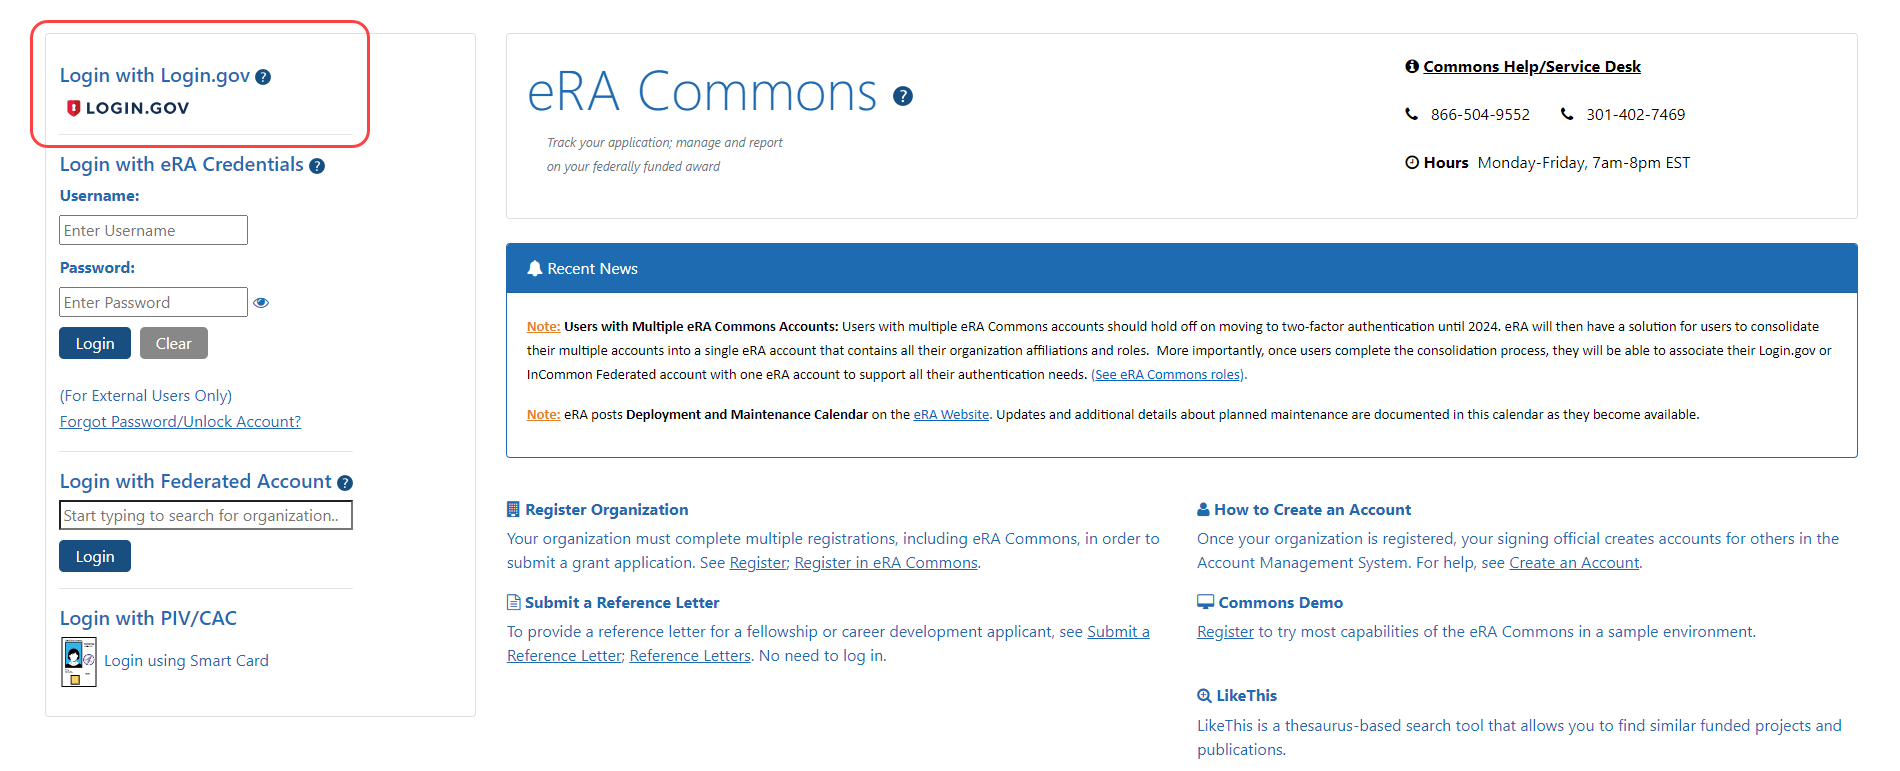 eRA Commons (IAR) login screen showing the Login.gov link